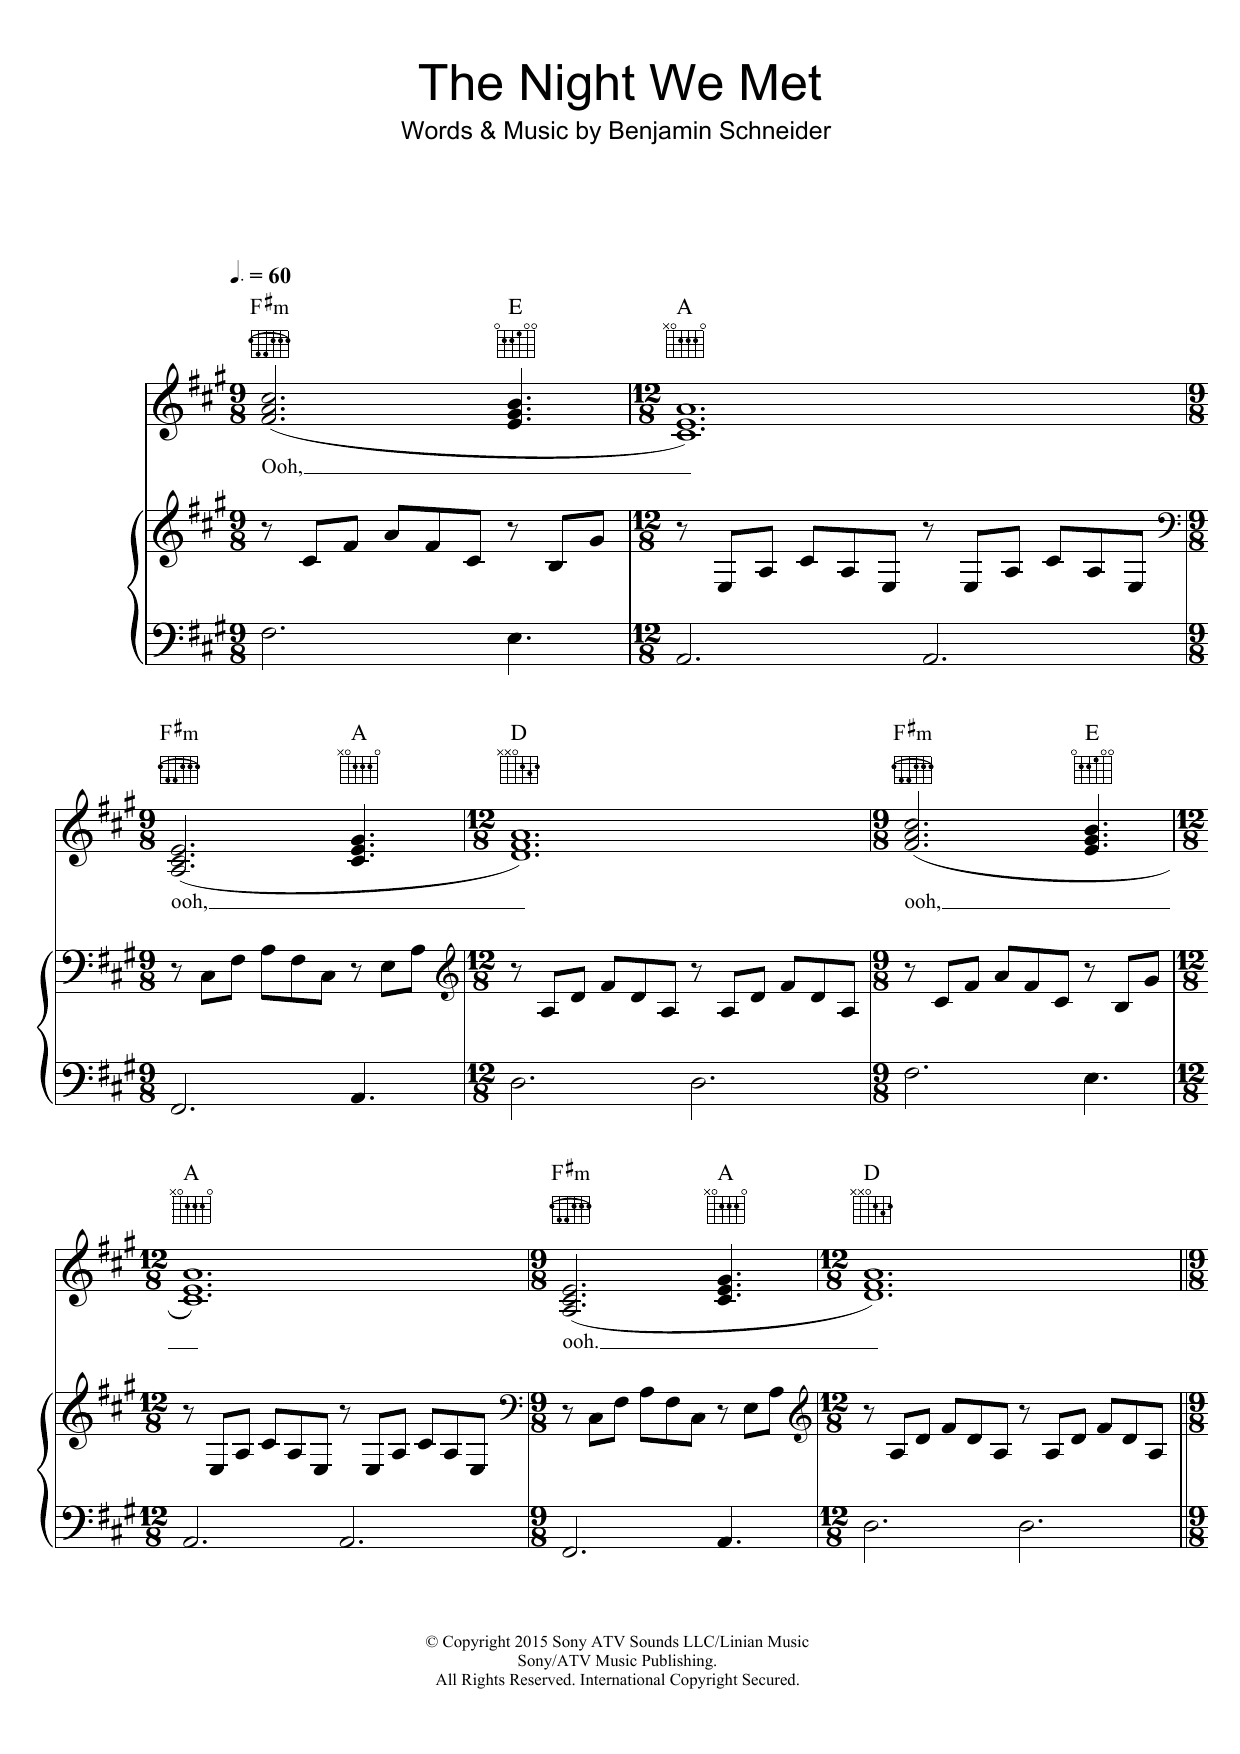 Lord Huron The Night We Met Sheet Music Notes & Chords for Guitar Chords/Lyrics - Download or Print PDF